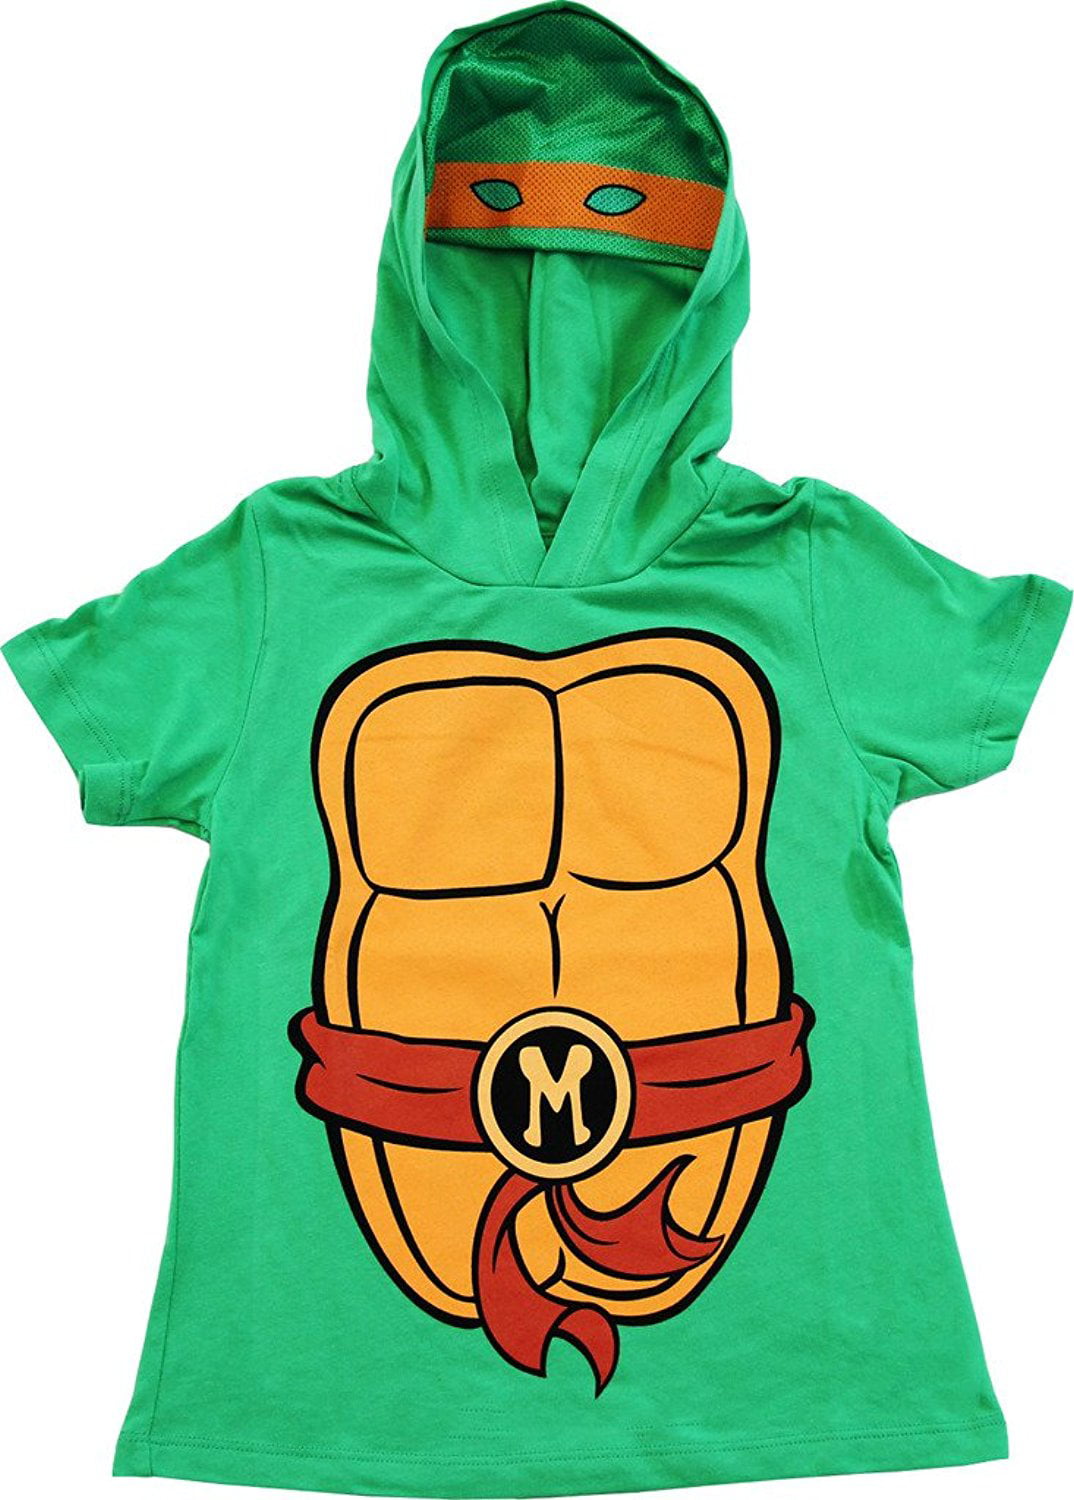 TMNT Costume Hoodies t-shirt